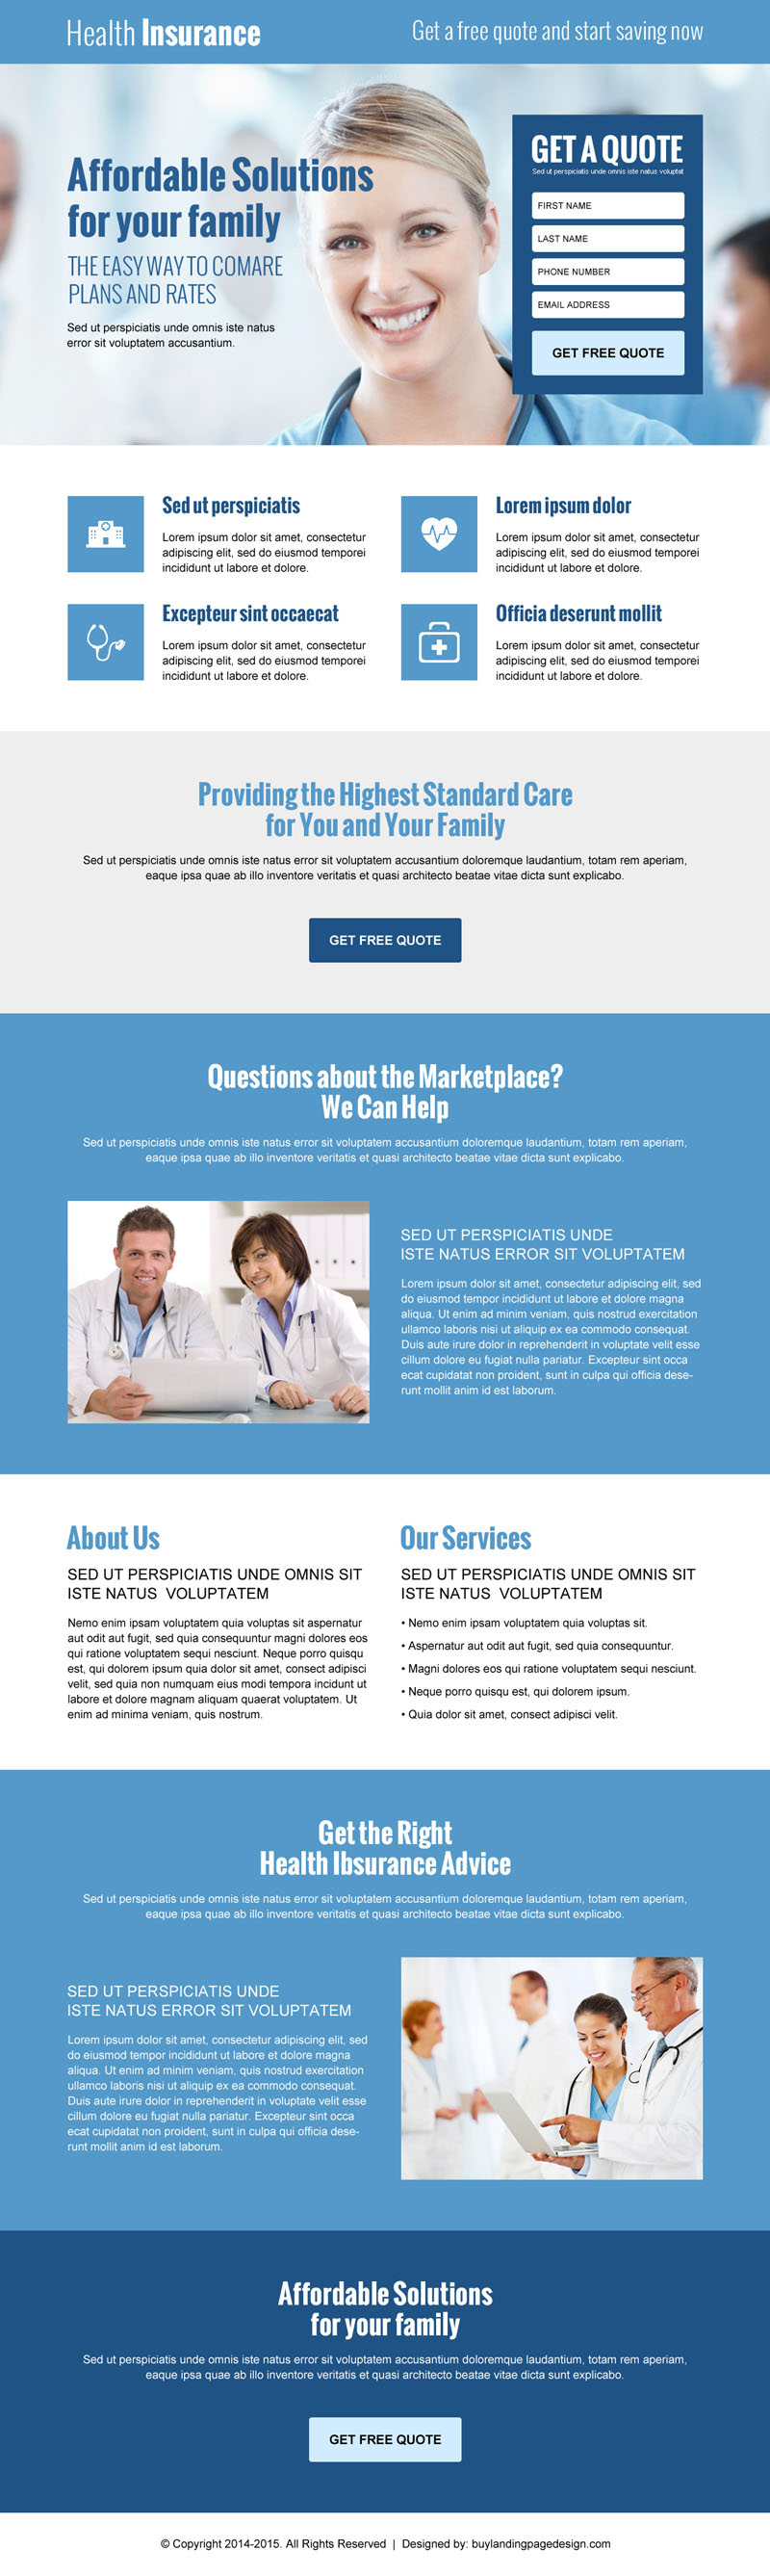 best-health-insurance-lead-generation-landing-page-design-016